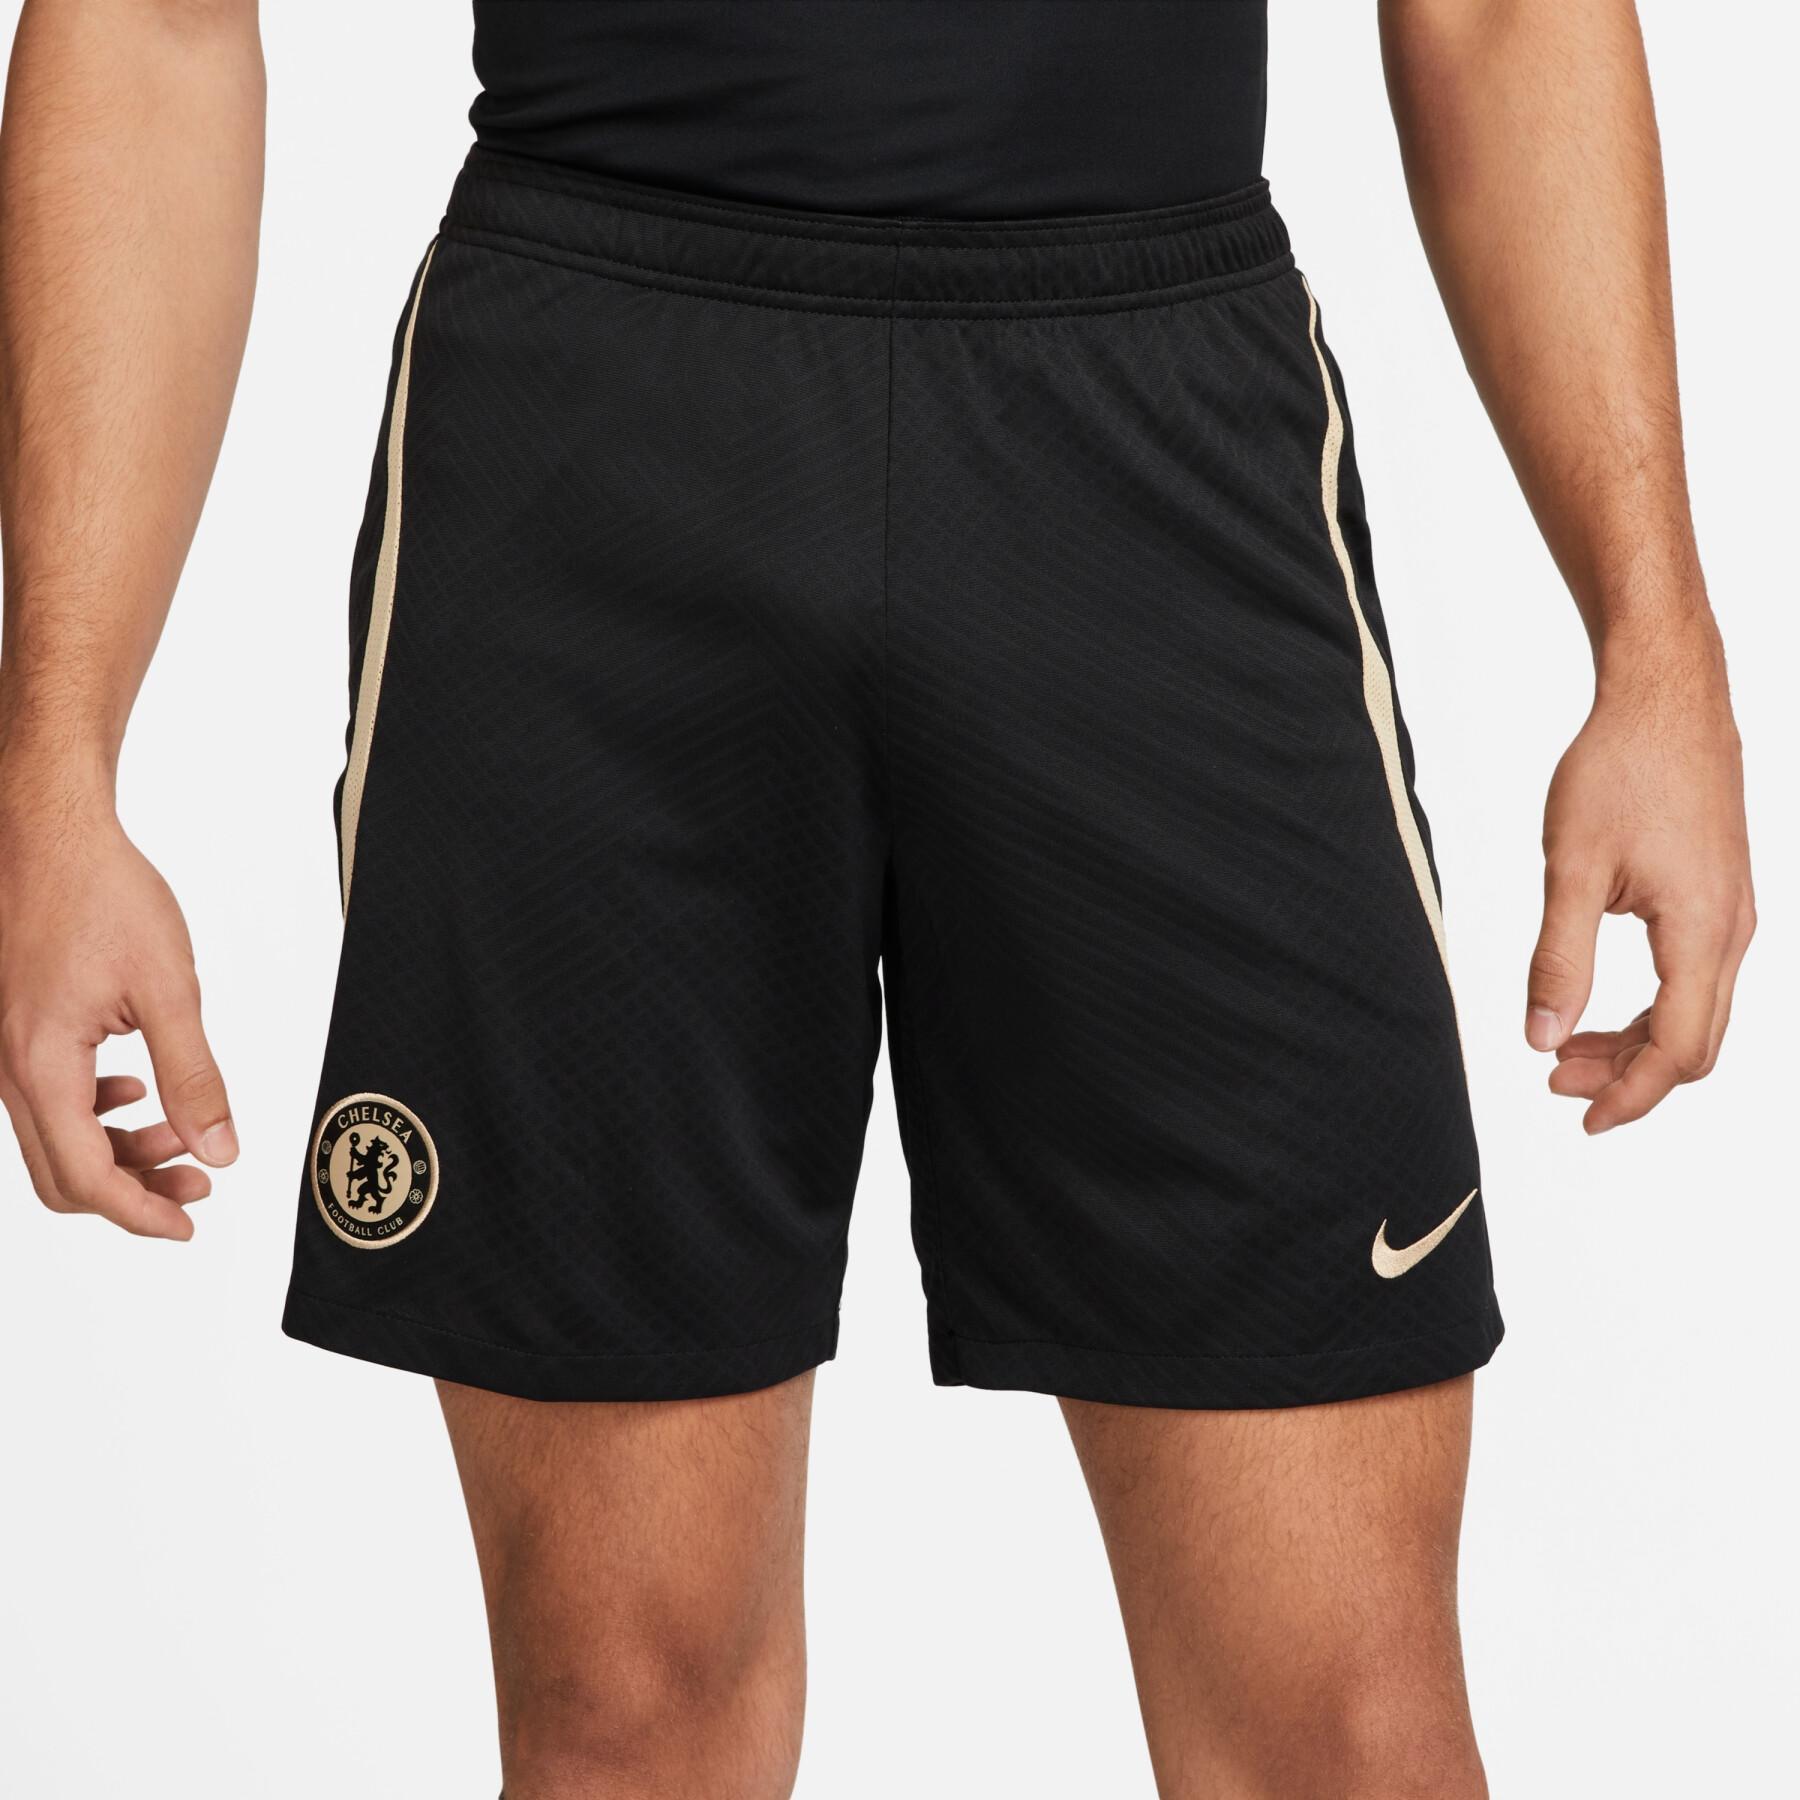 Chelsea shorts 2022/23